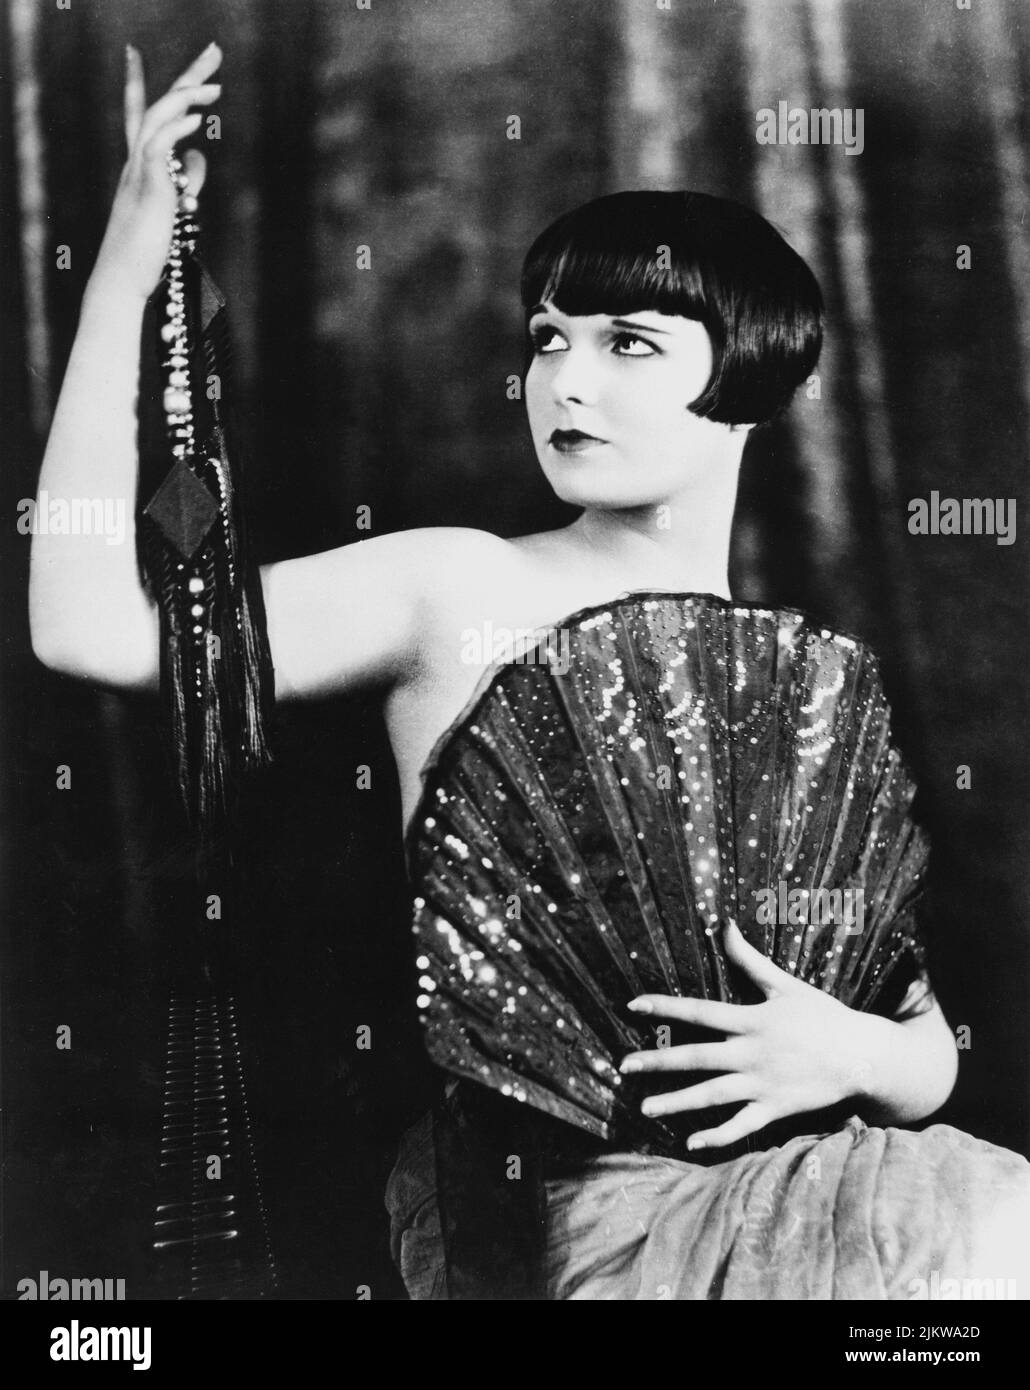 1929  : the american actress LOUISE BROOKS ( Wichita , KS 1906 - Rochester , NY 1985 ) in  LULU ( The Pandora Box - Il vaso di Pandora ) by G W  PABST  -  CINEMA MUTO - SILENT MOVIE - sex symbol - attrice cinematografica  - top-less - topless - fan - ventaglio  - sex-symbol ----  Archivio GBB Stock Photo